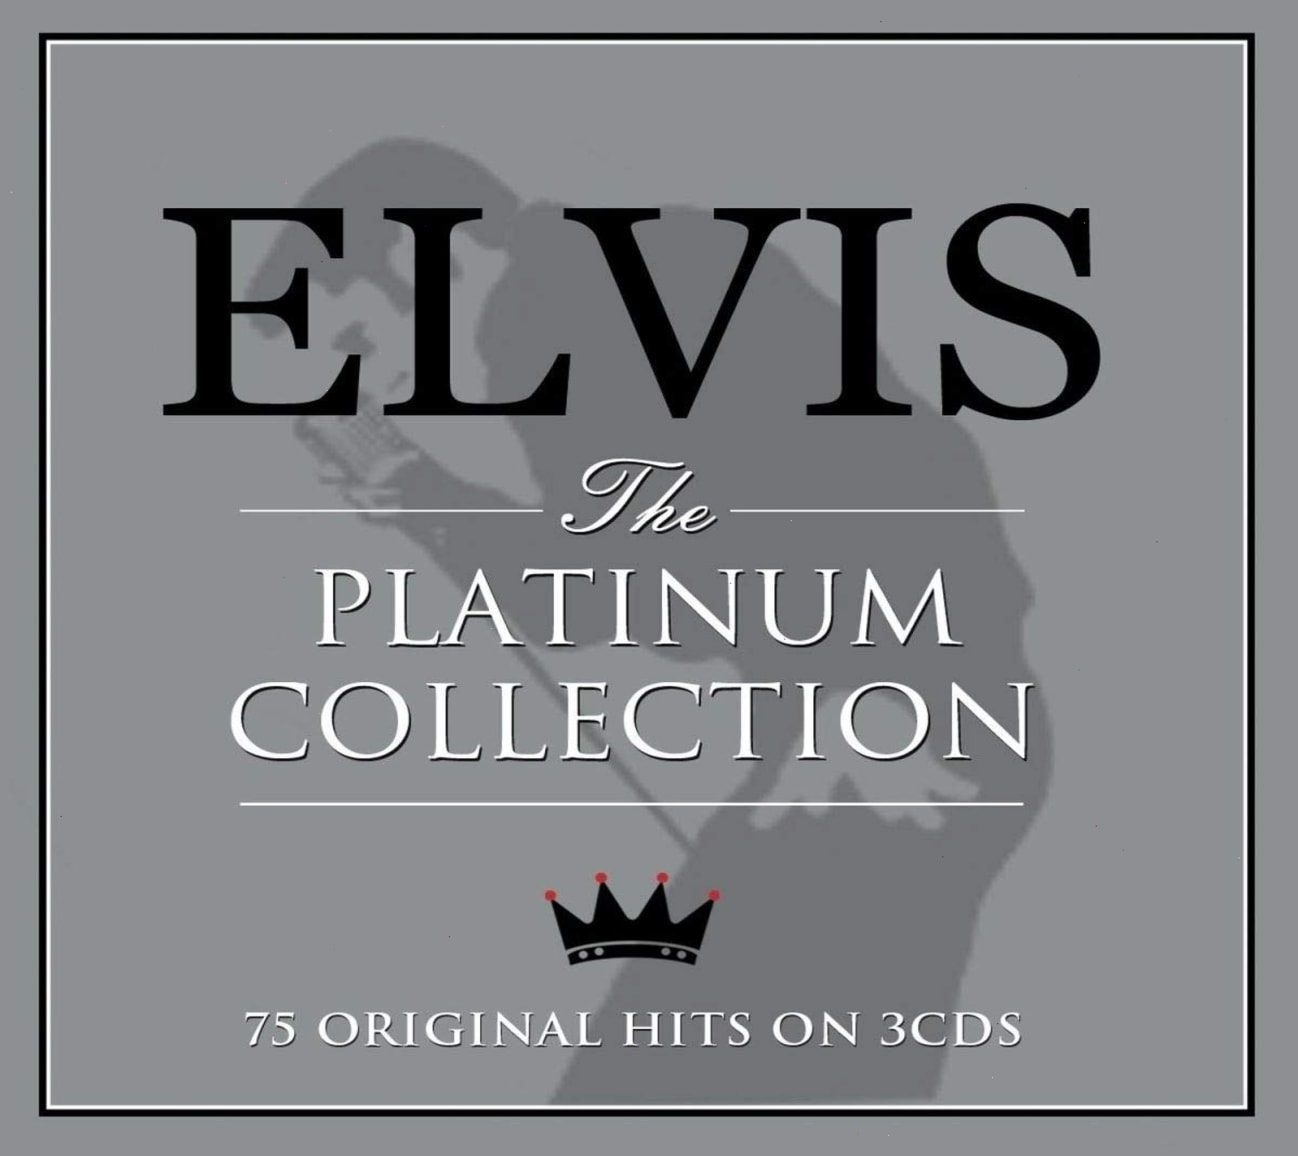 Elvis Presley – Platinum Collection (Audio CD) on MovieShack